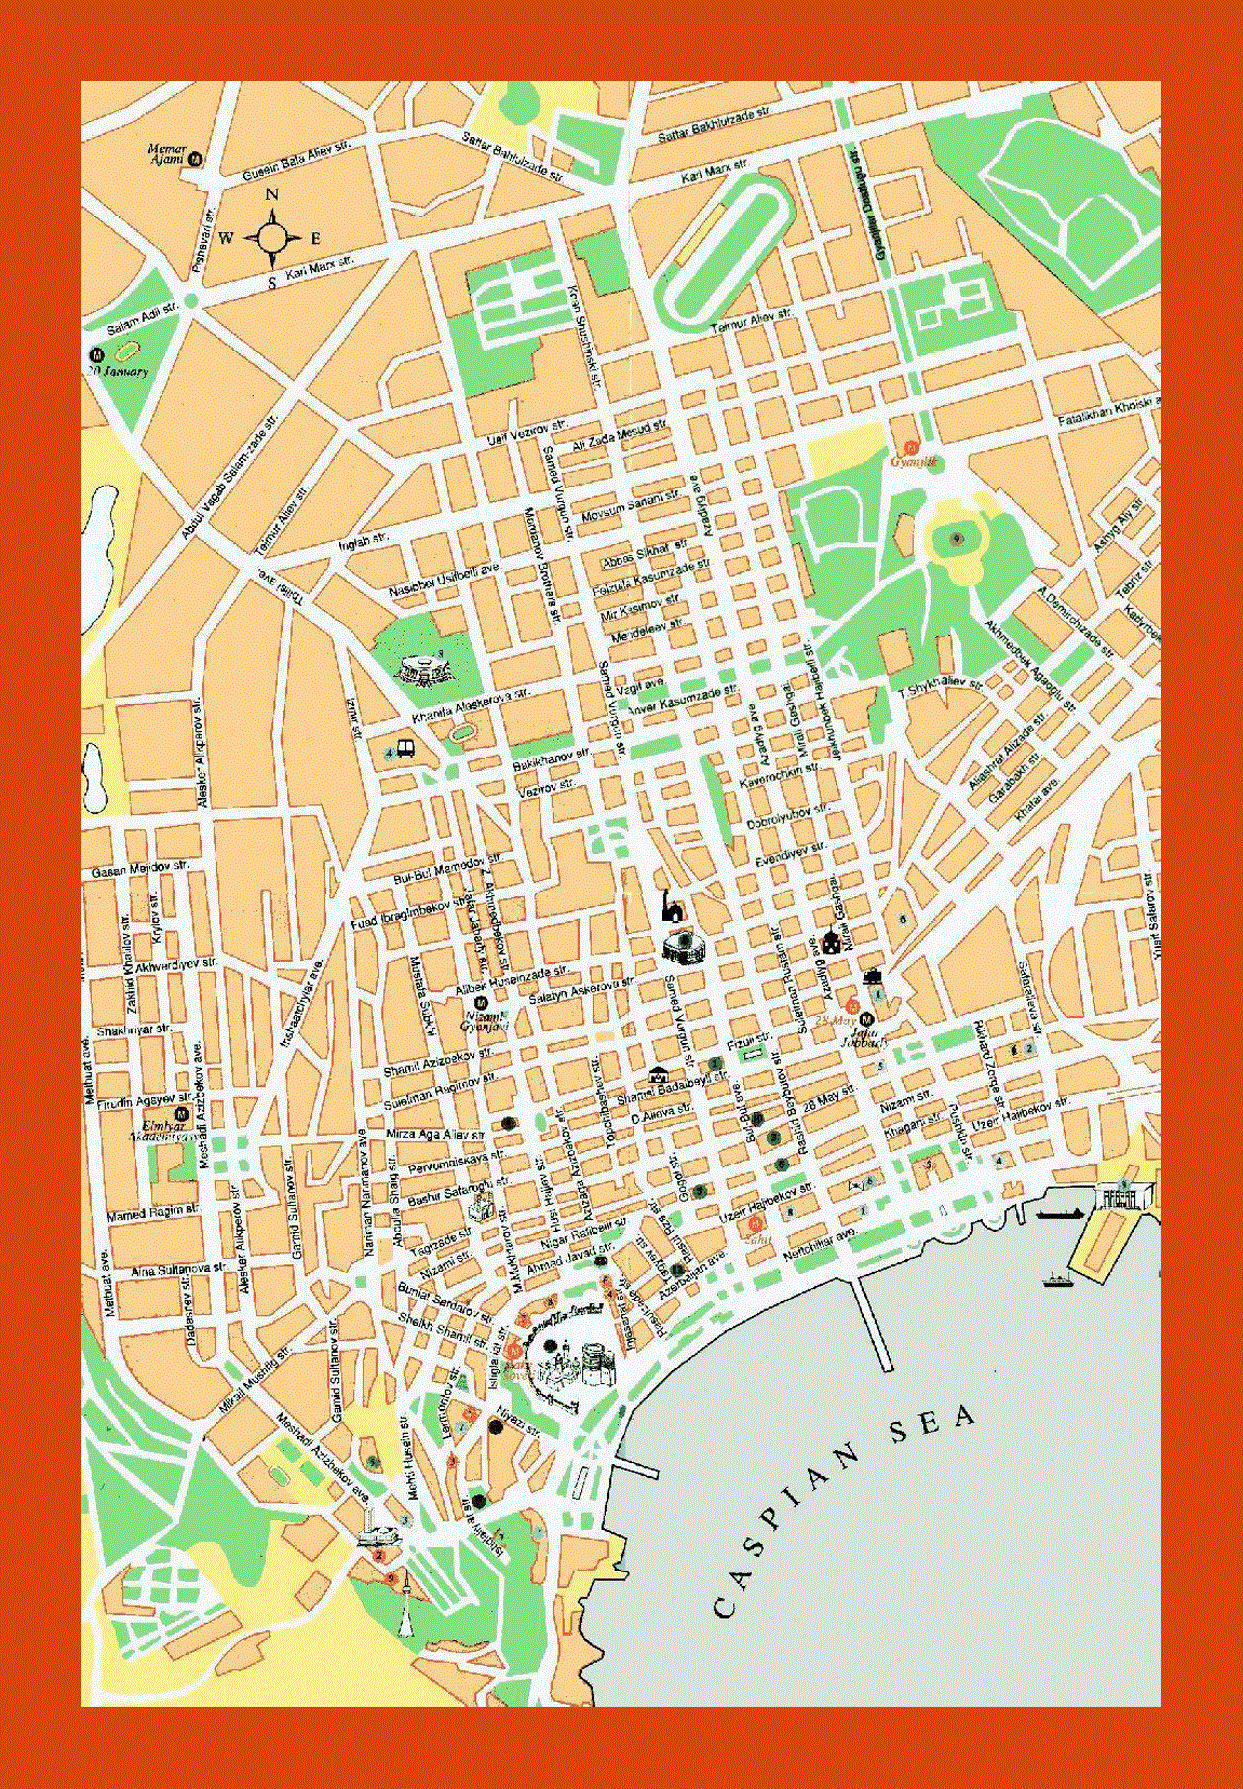 Baku city road map